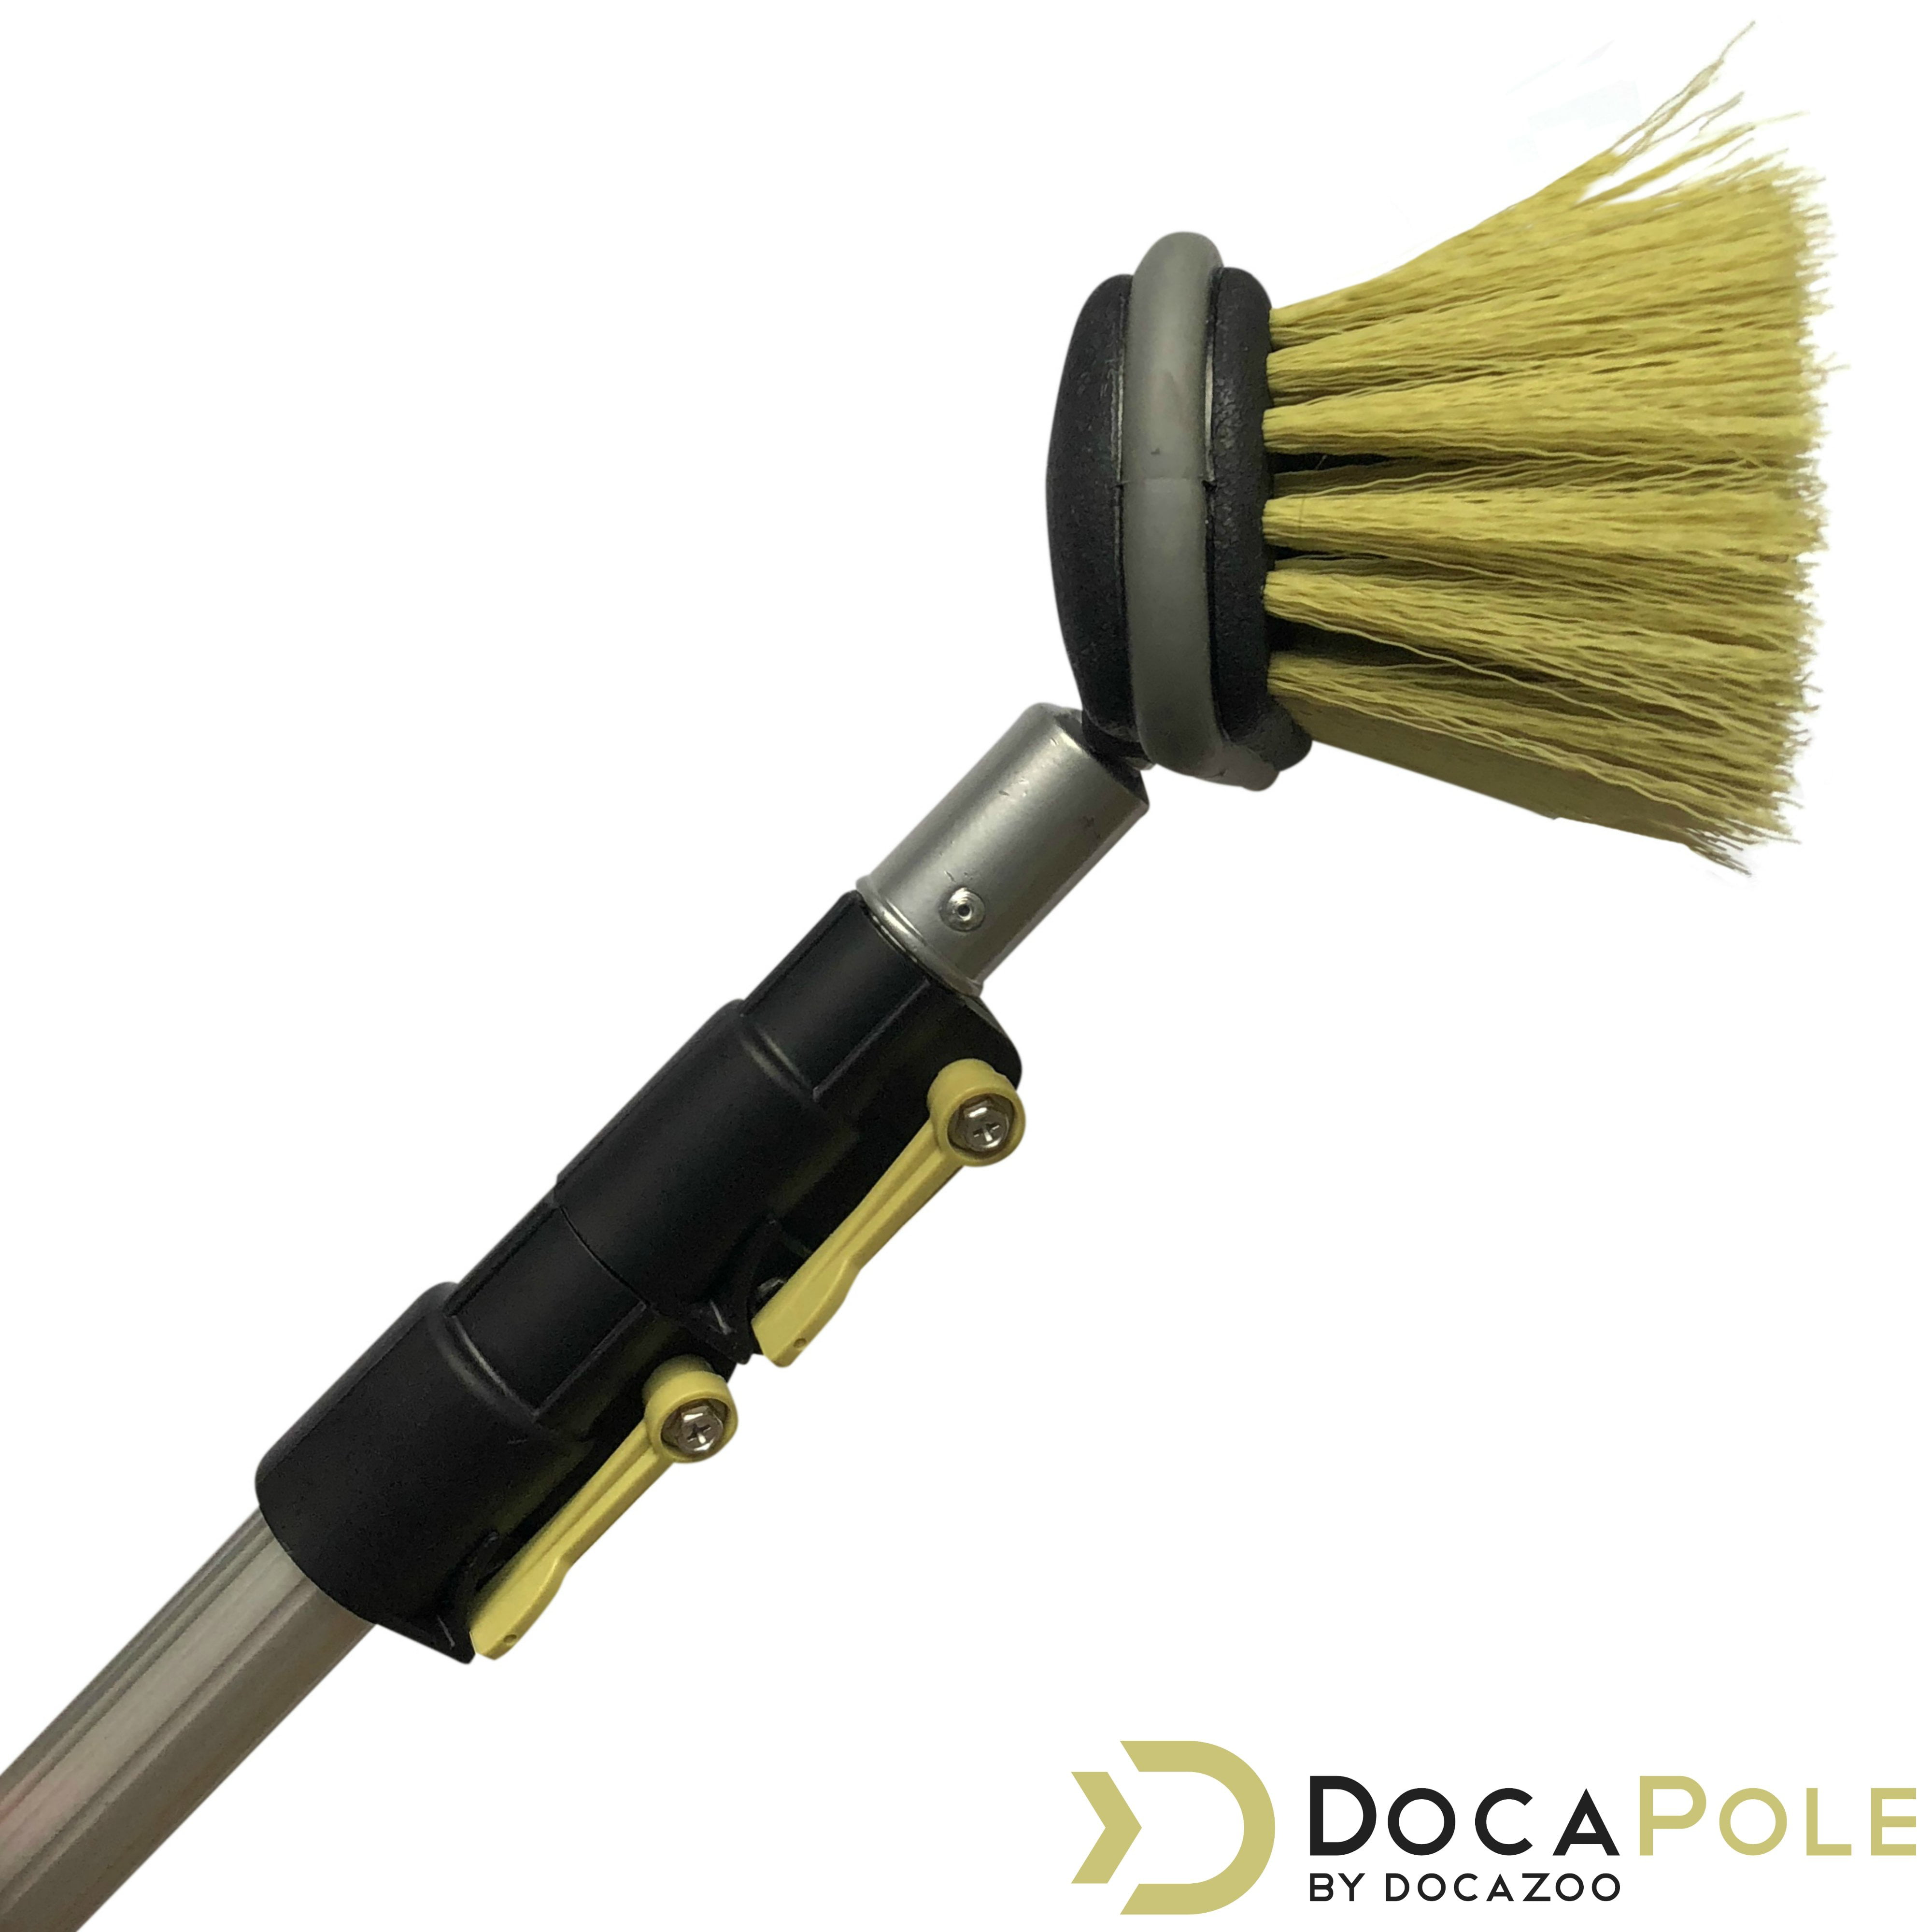 DocaPole Medium Bristle Deck Brush + 5-12' Extension Pole|11" Scrub Telescoping Brush For Cleaning Siding